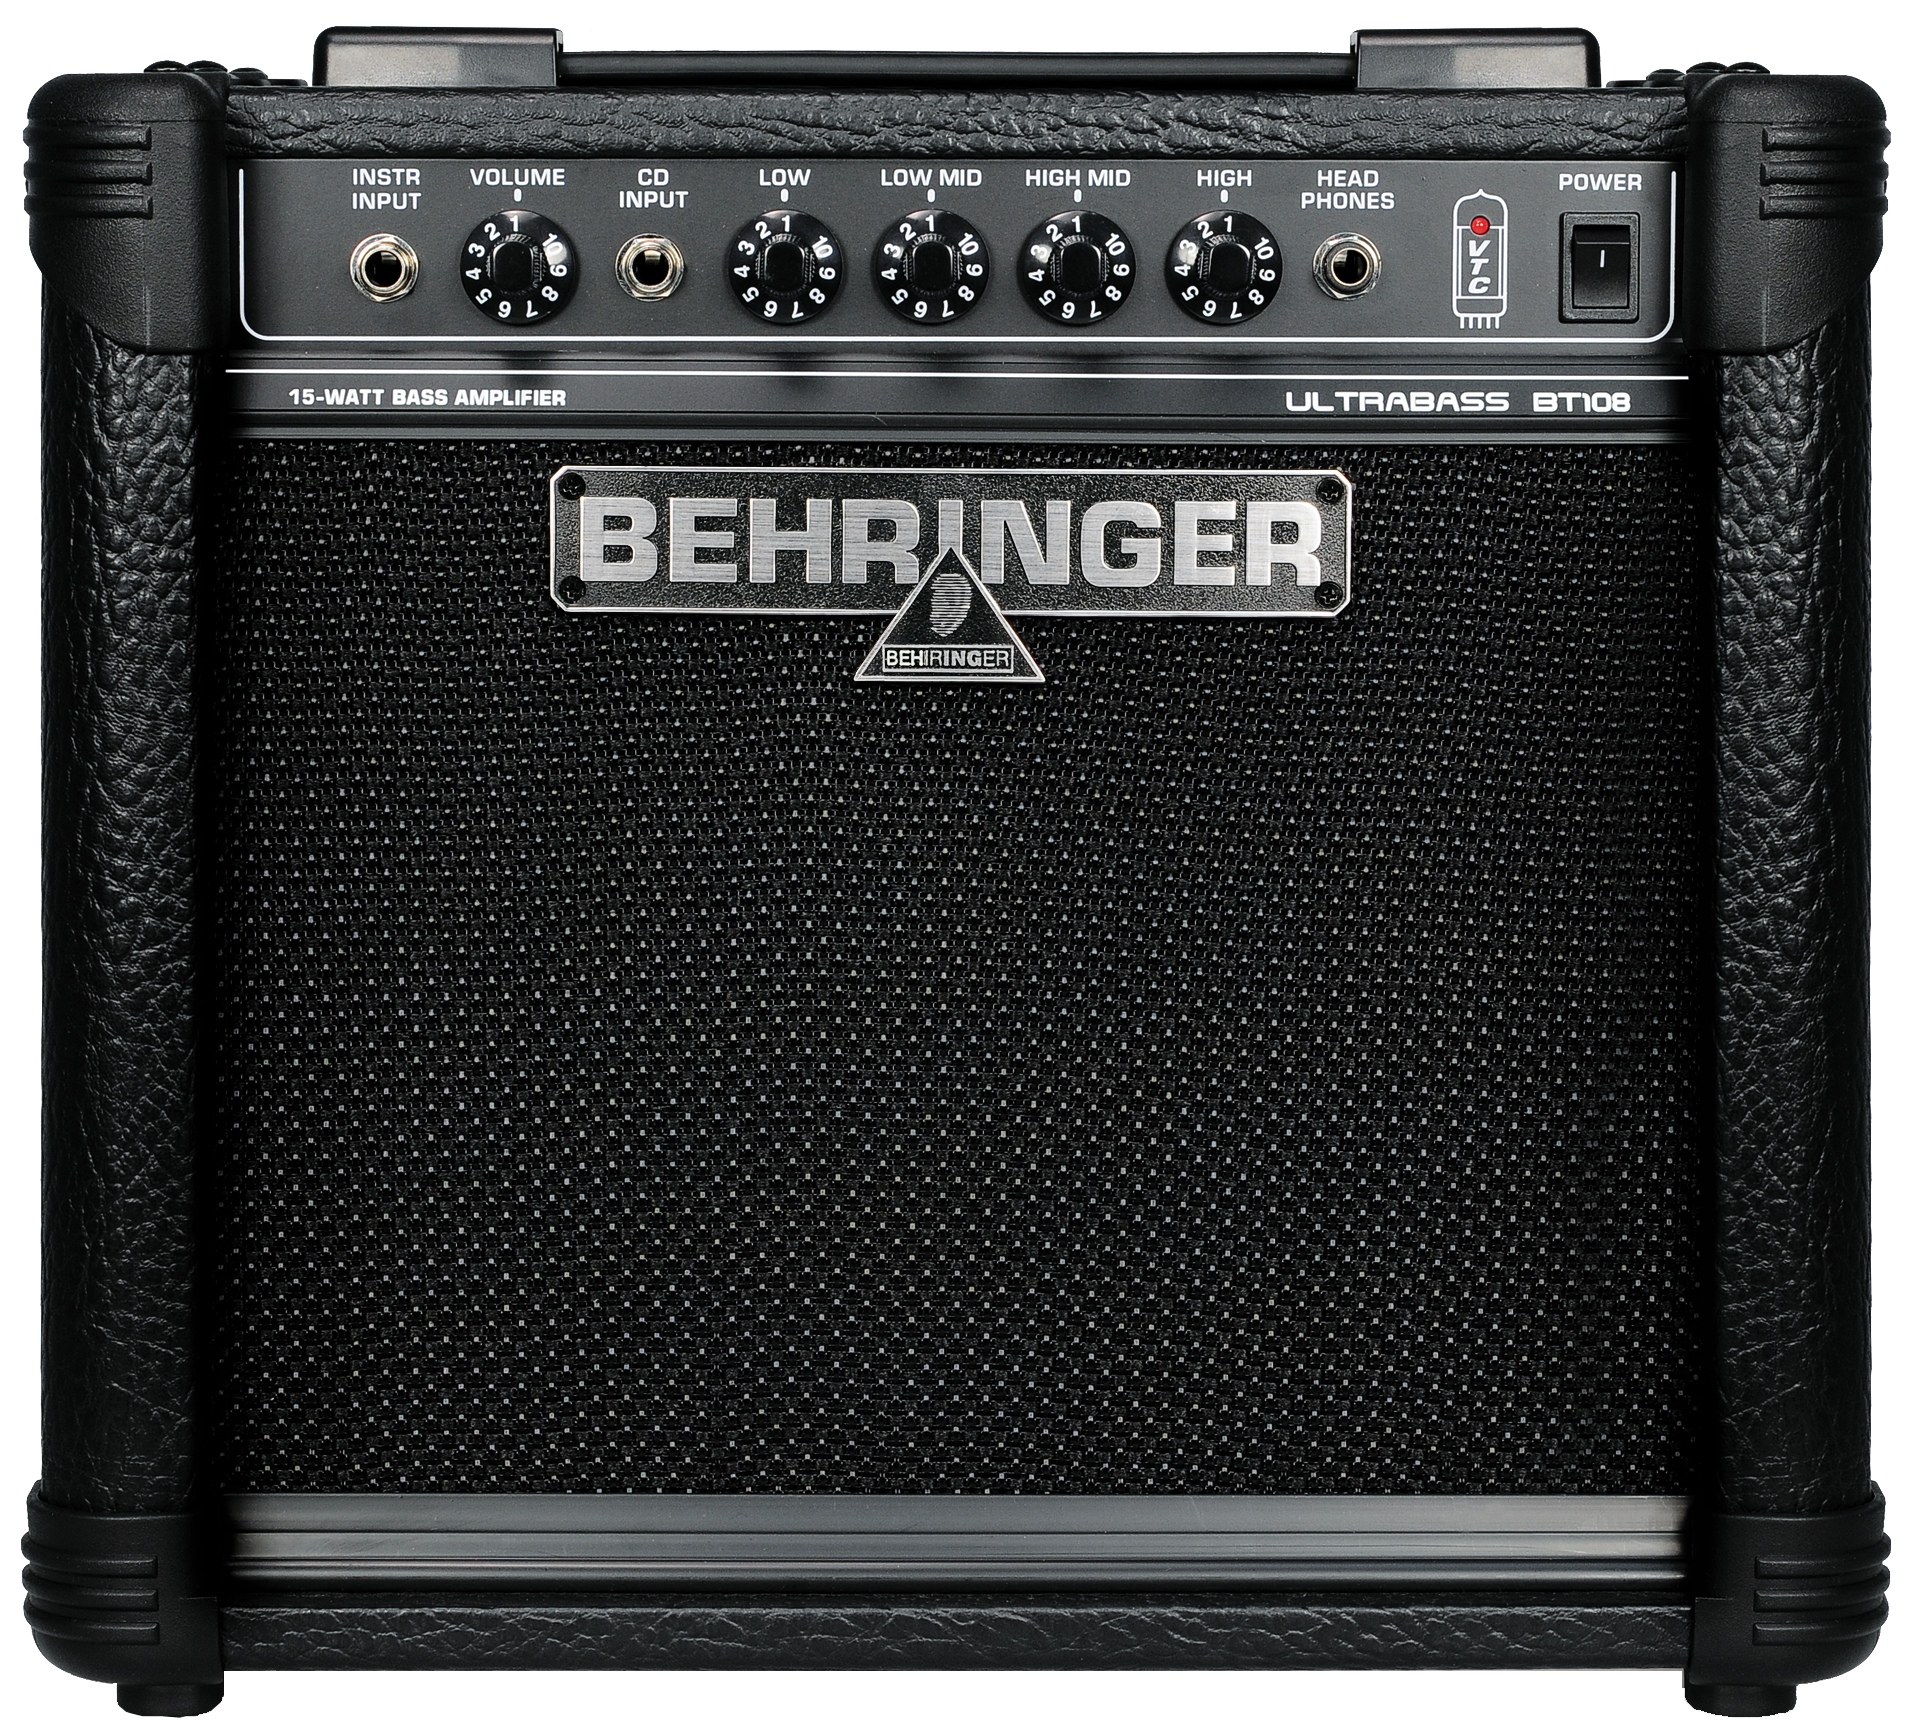 V toned. Комбоусилитель Behringer gm108 v-Tone. Комбик для электрогитары Behringer v-Tone GM 108. Комбик Behringer v-Tone gm110. Behringer Ultrabass bt108.